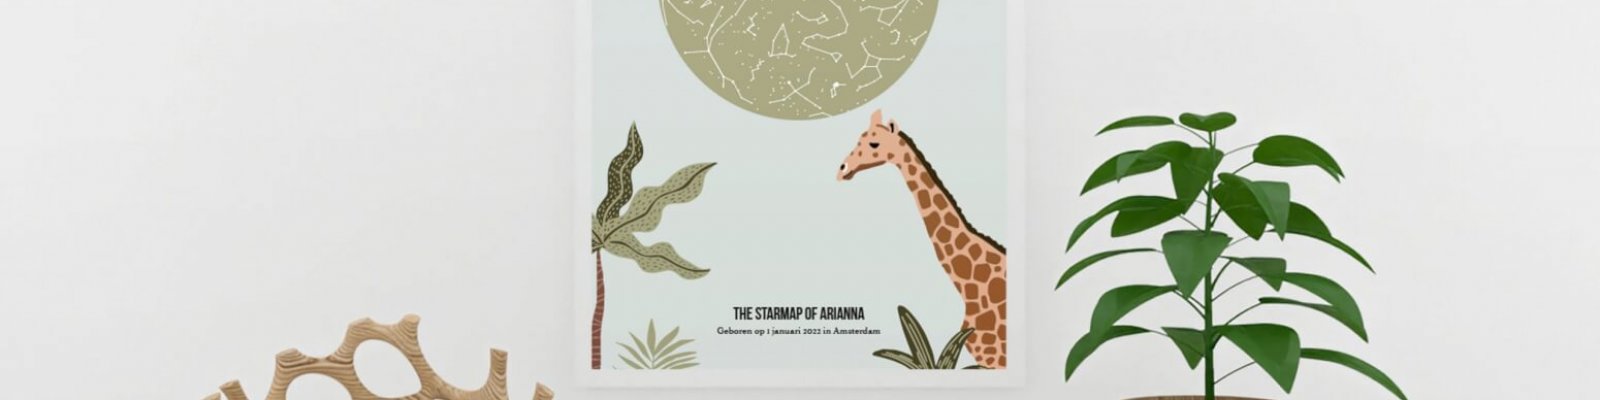 Poster sterrenhemel babykamer geboorte met giraffe